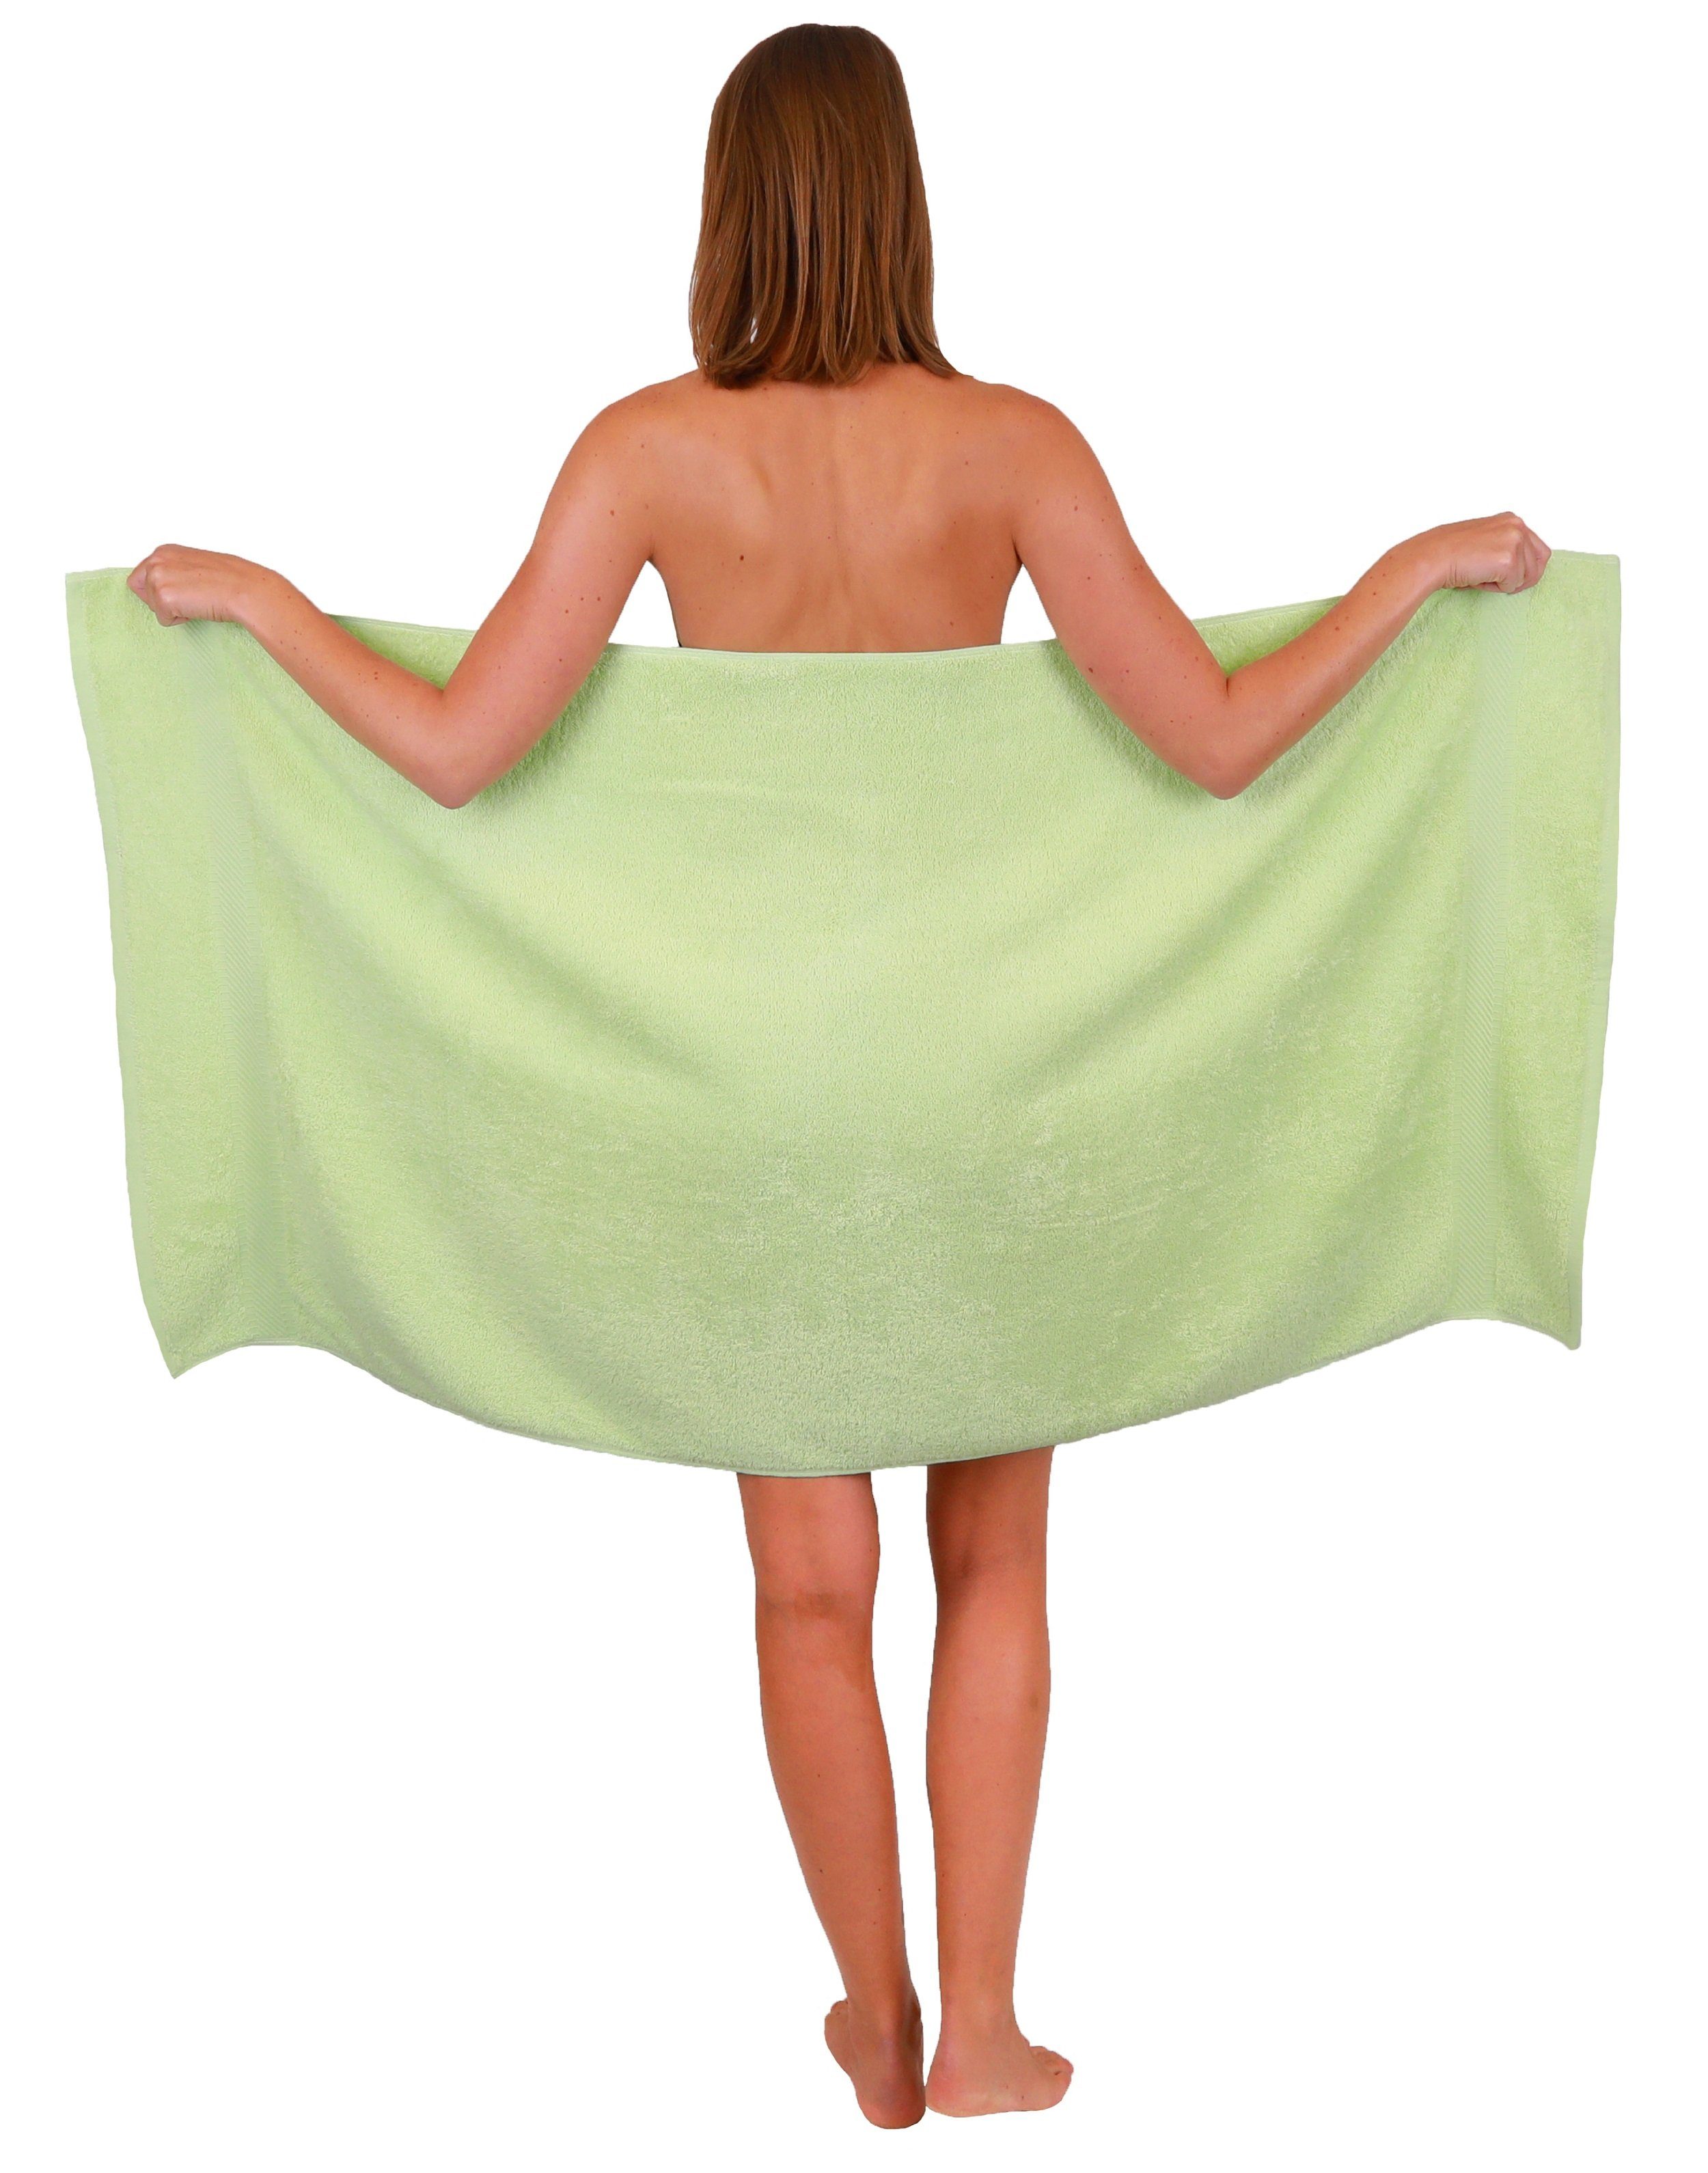 Palermo cm 70x140 Stück Baumwolle Duschtücher Set 4 Duschtücher Duschhandtuch grün Badetuch Sporthandtuch, Betz Baumwolle 100% Größe 100%